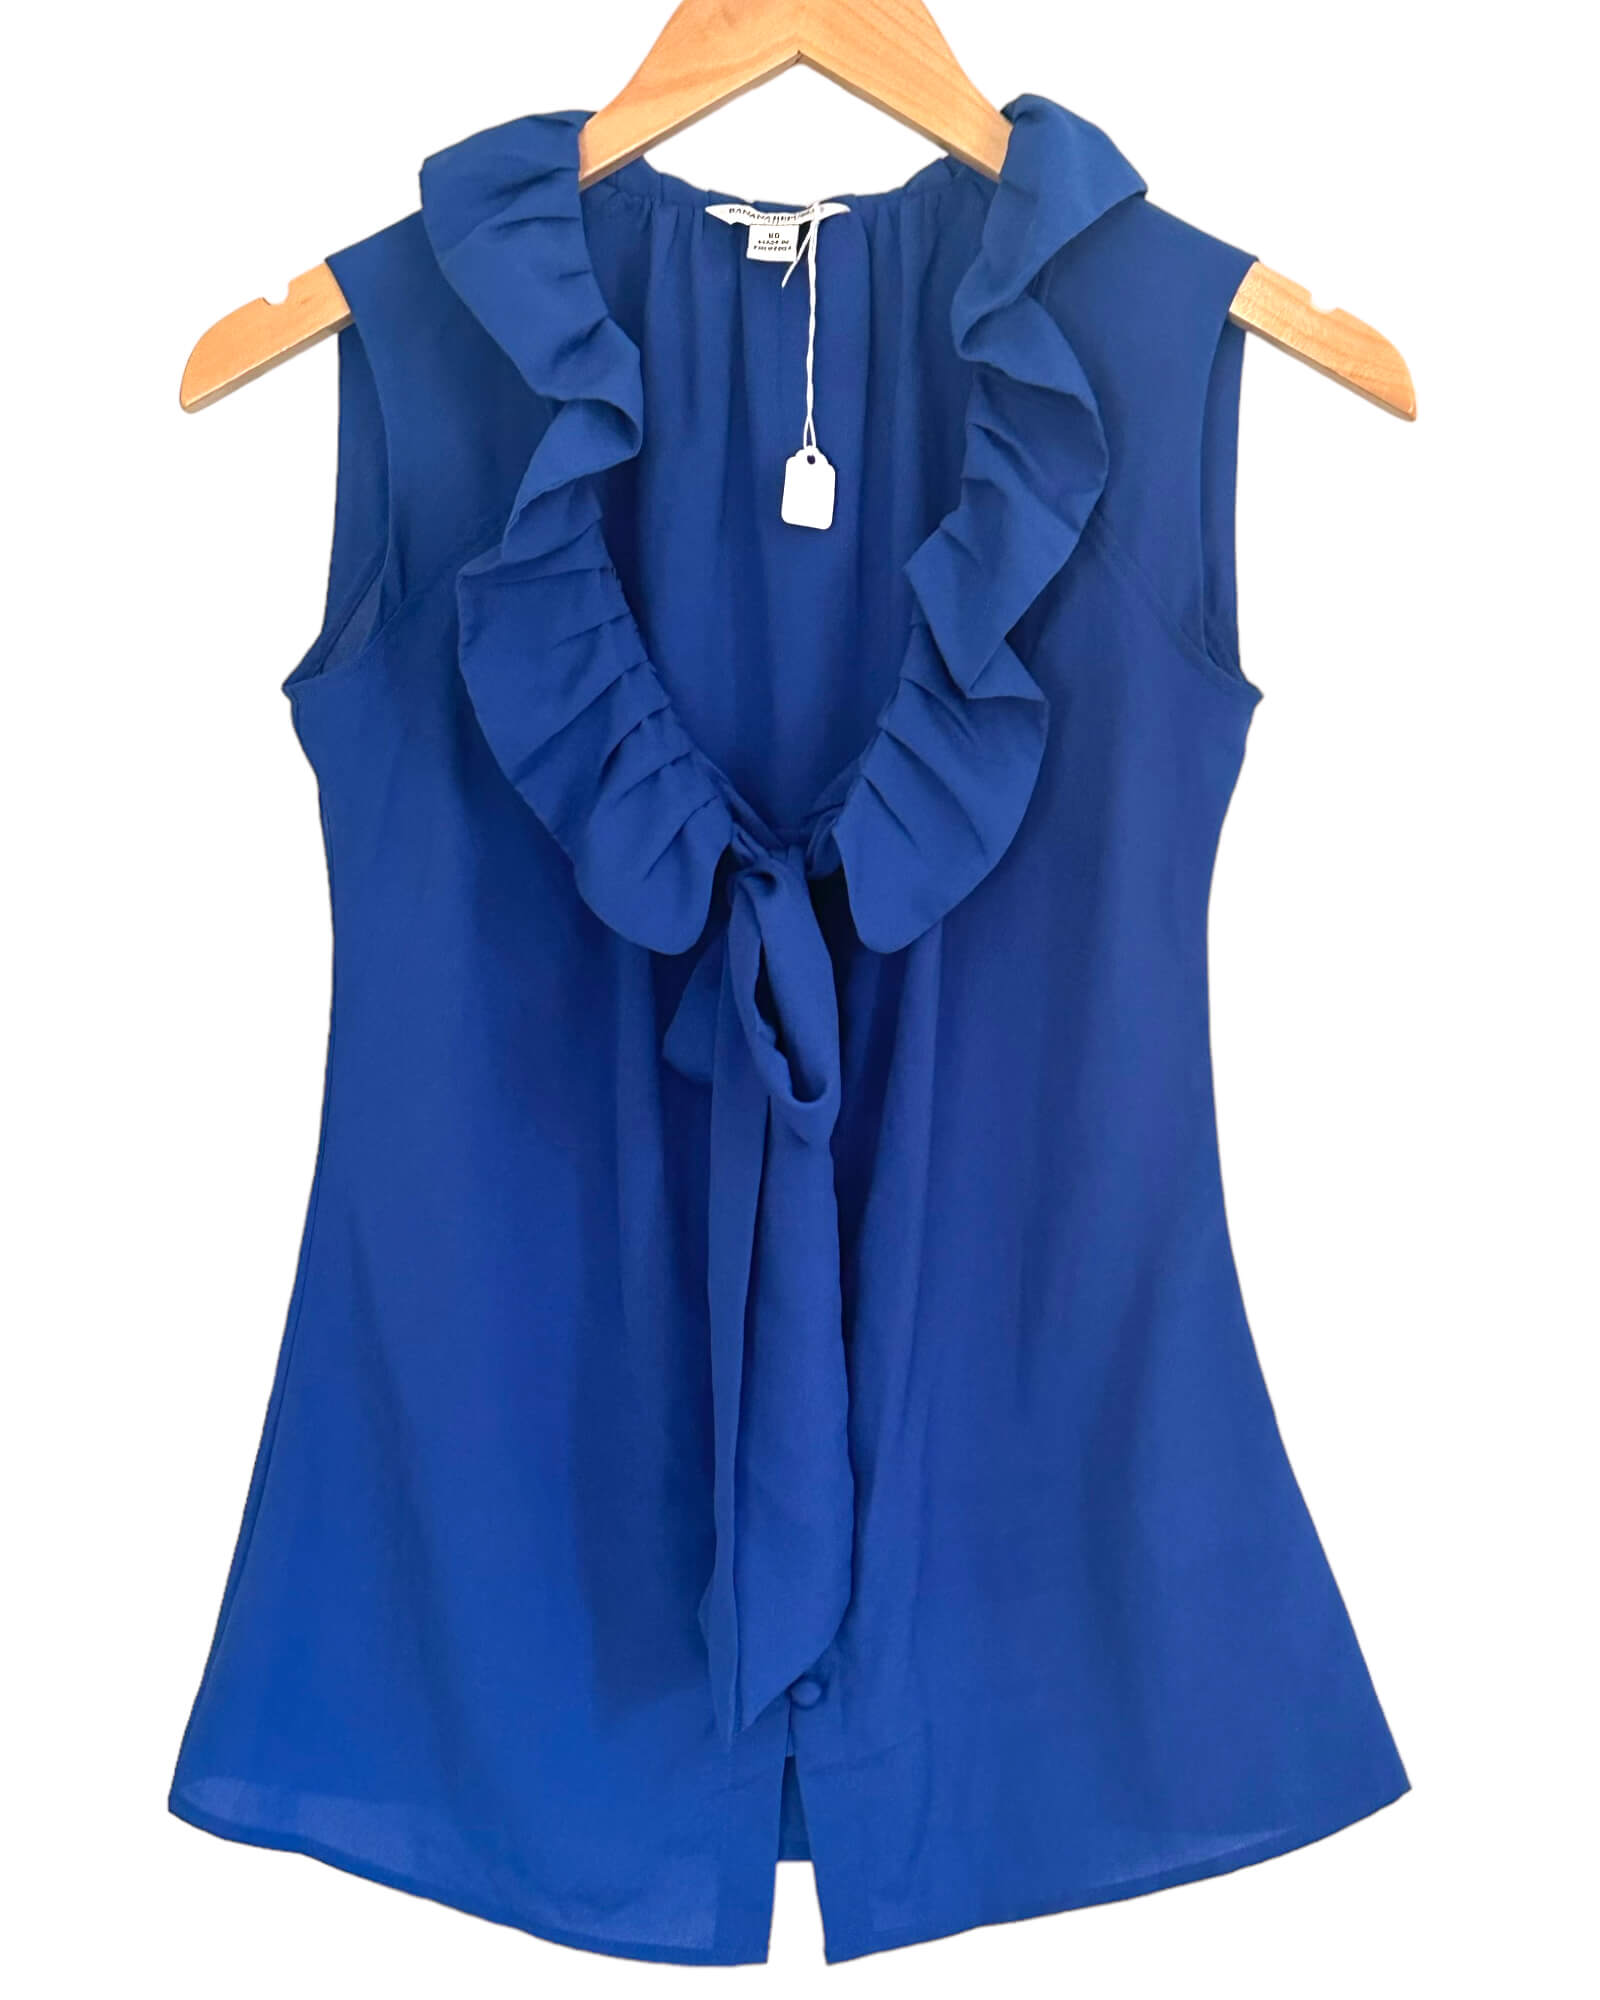 Light Summer BANANA REPUBLIC ink blue ruffle blouse